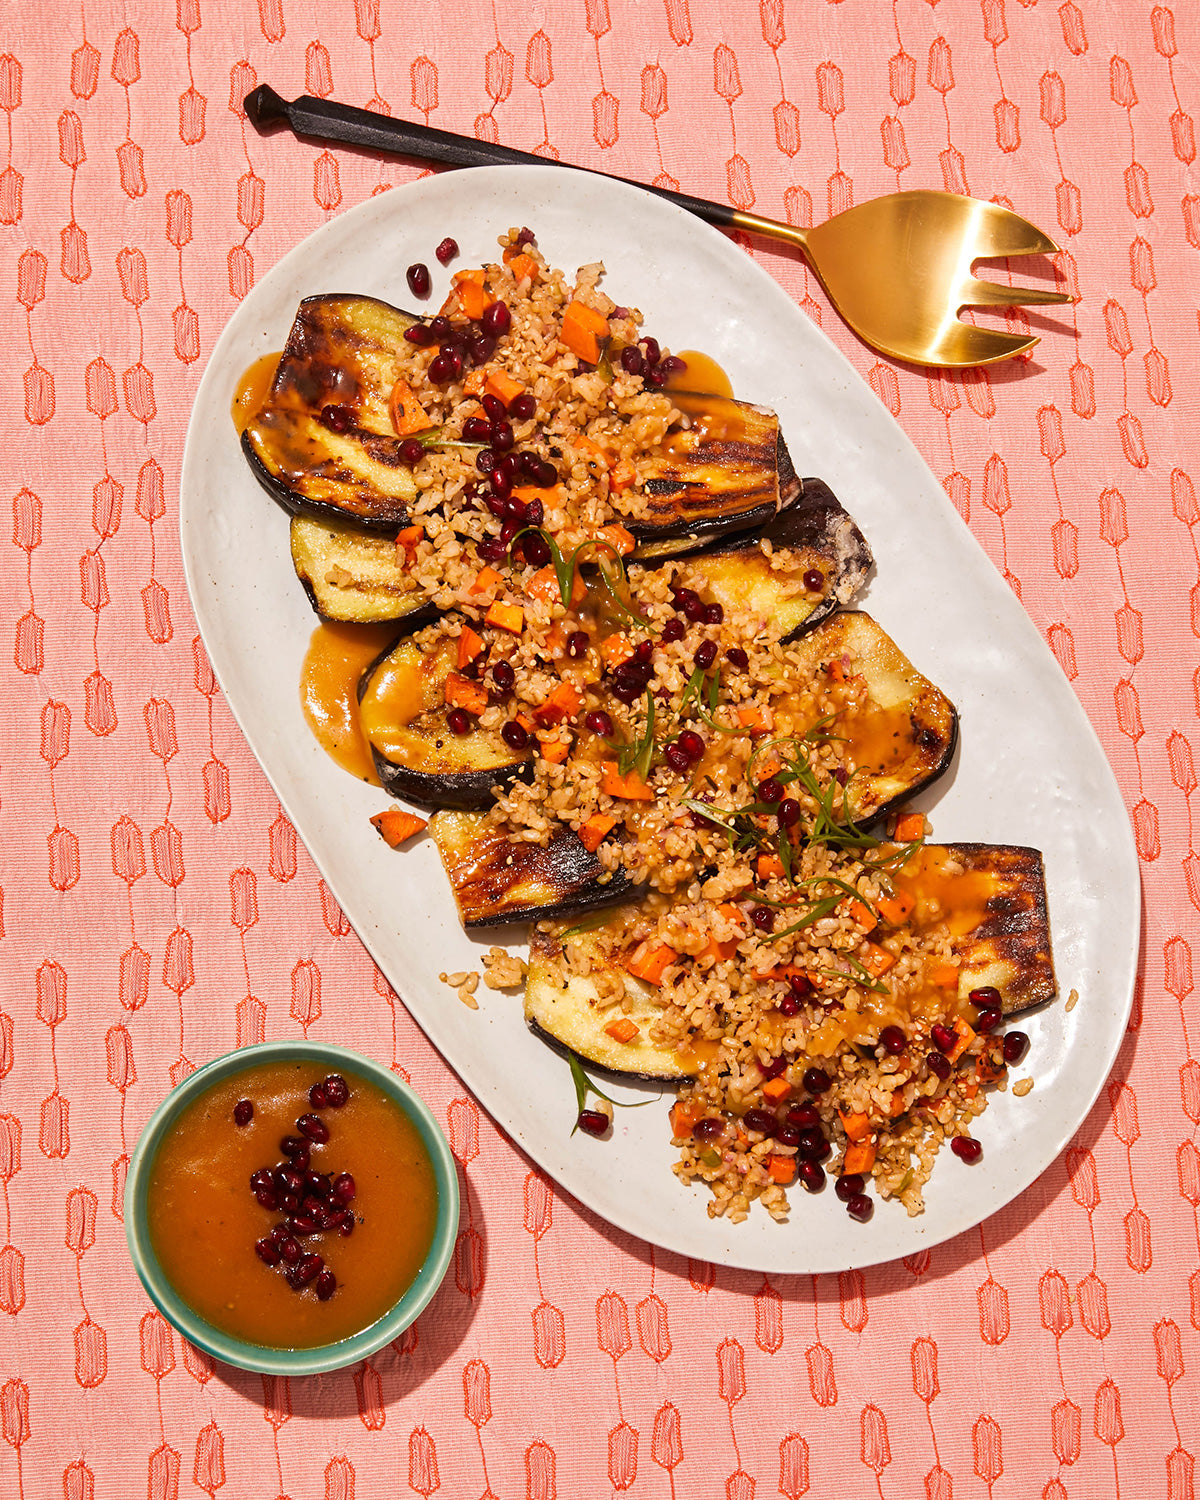 Crispy Eggplant “Steaks” with Fried Rice & Mushroom Gravy